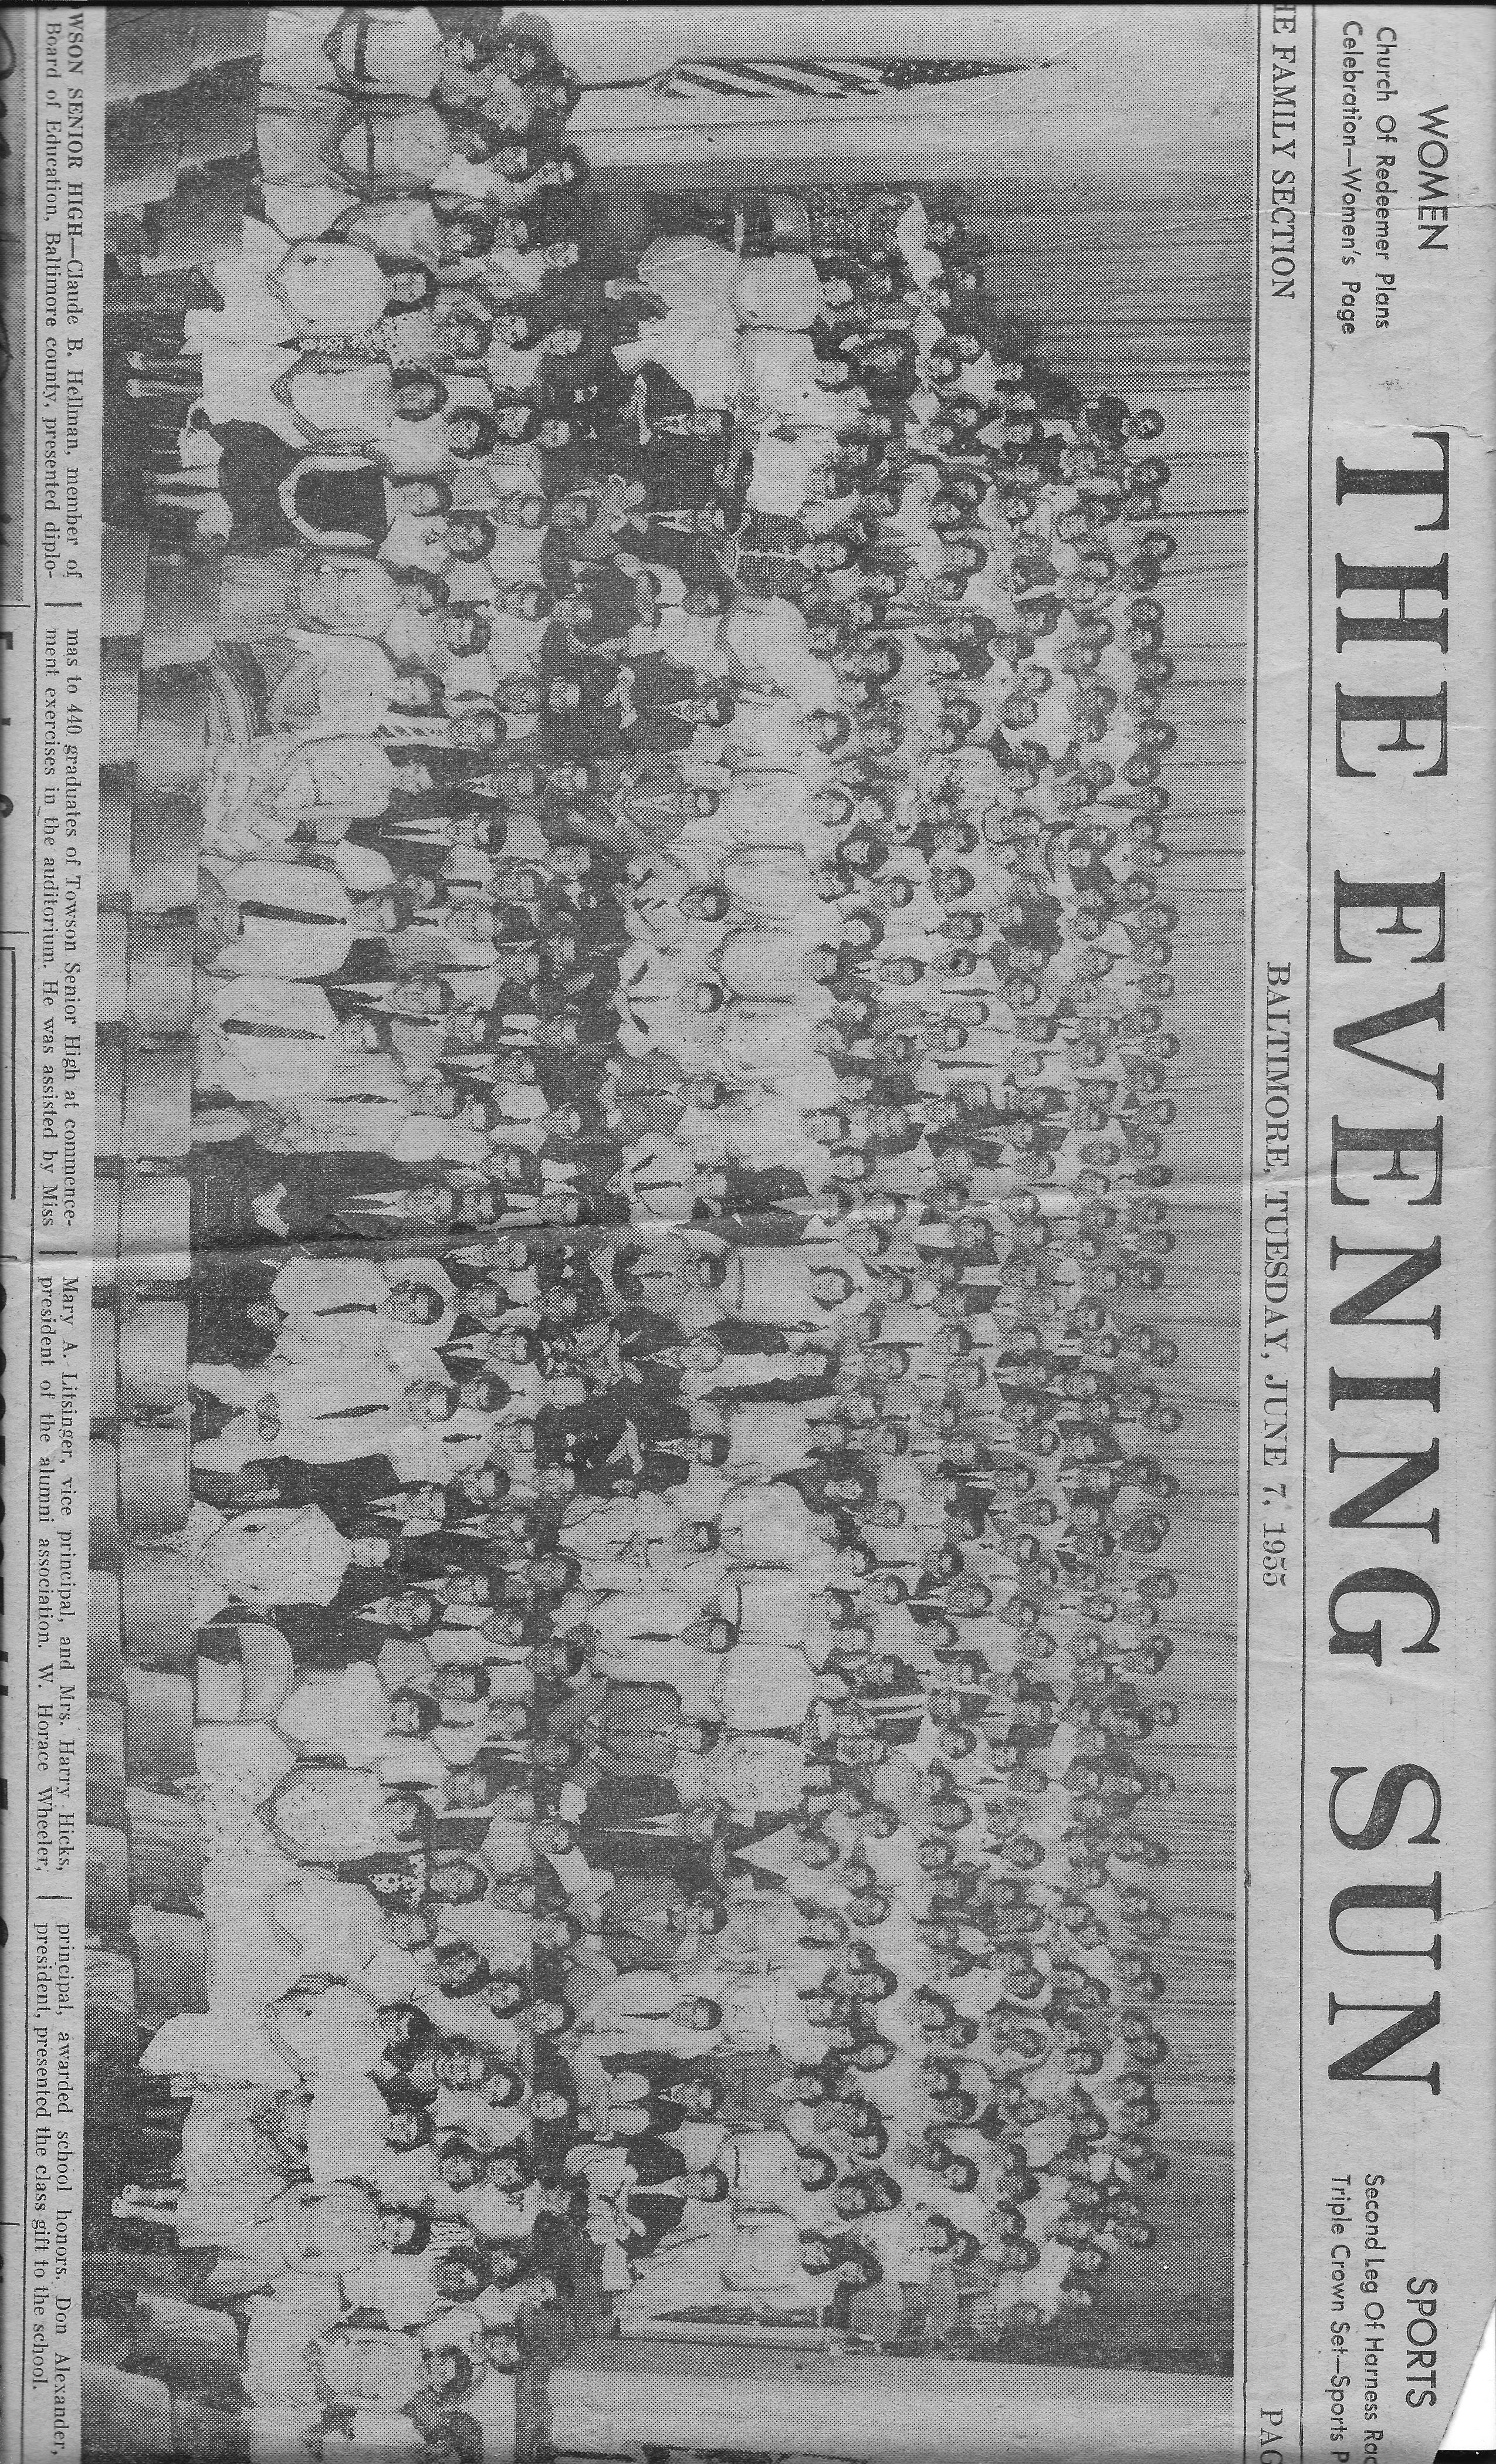 Baltimore Sun 1955 Grads